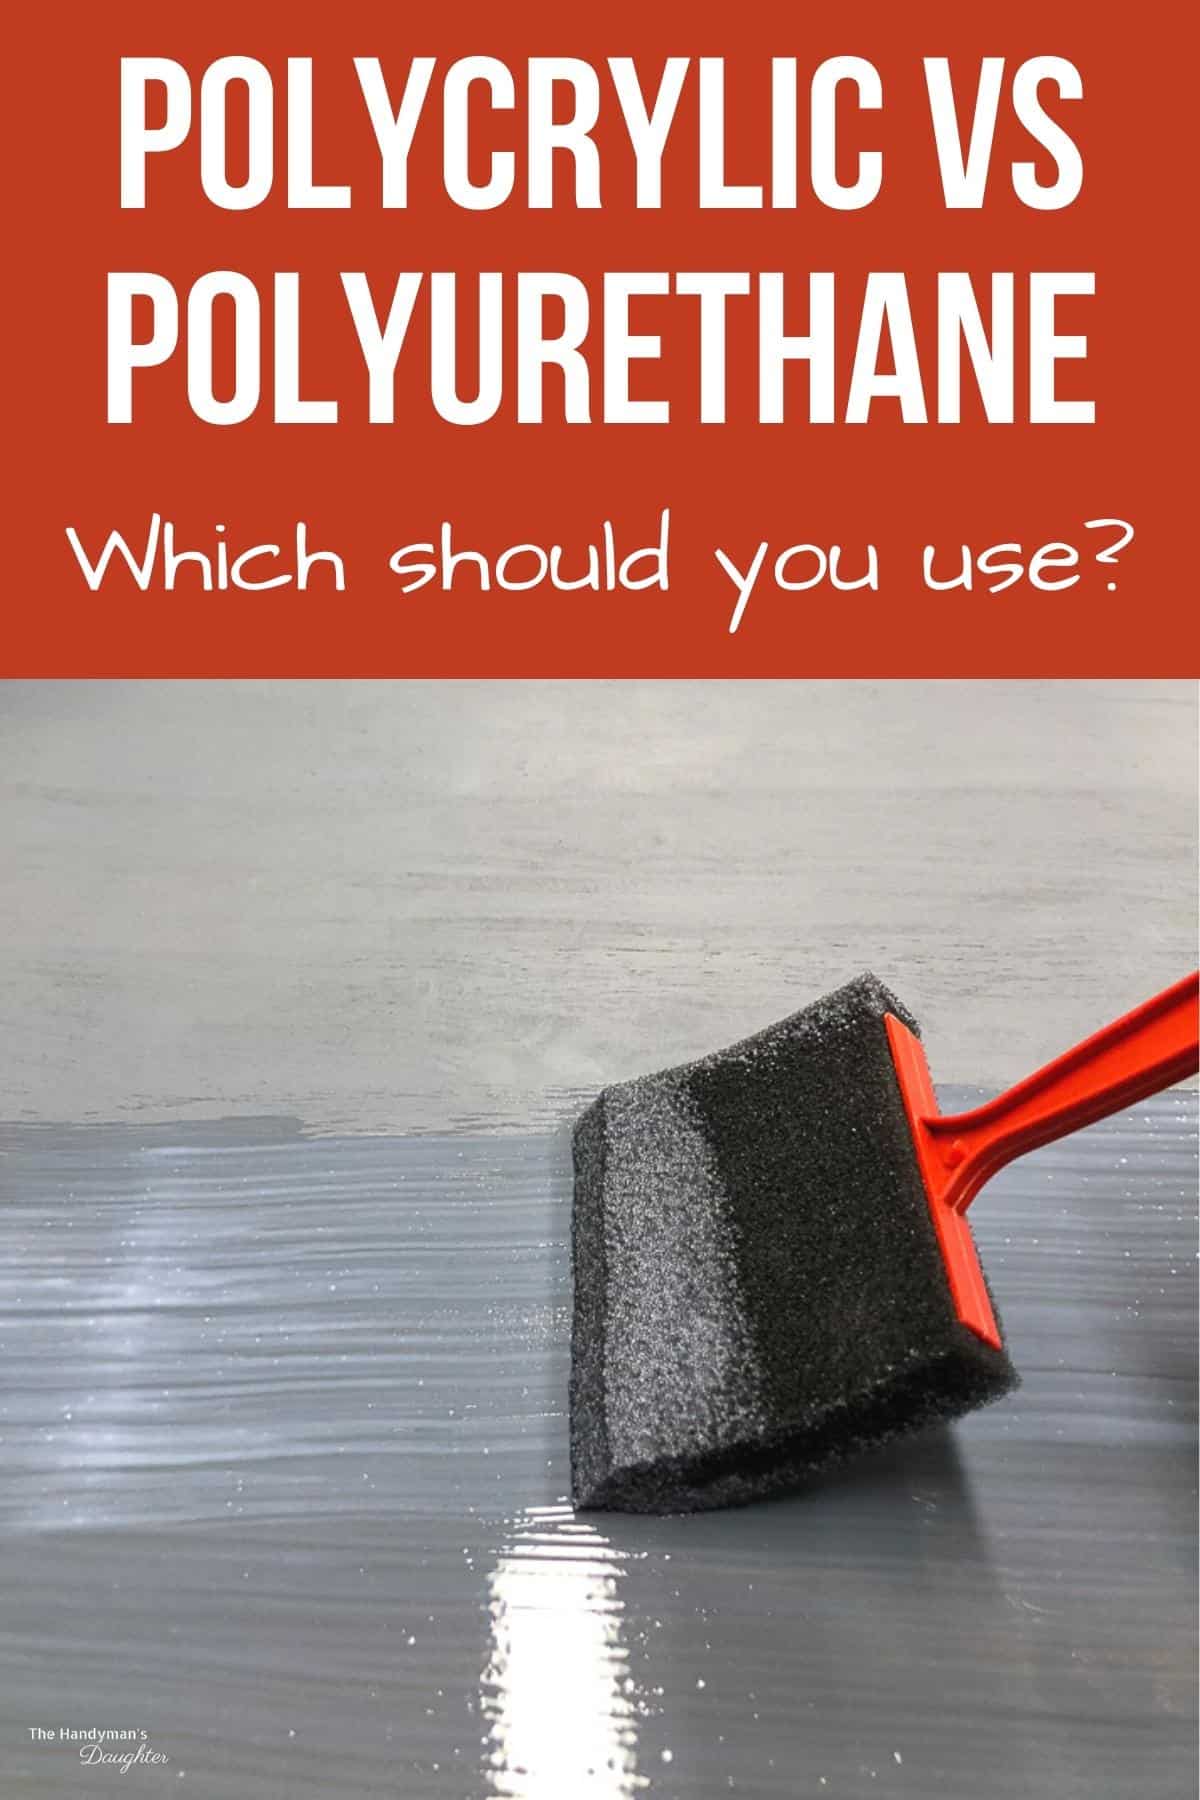 Polycrylic vs polyurethane - which should you choose?